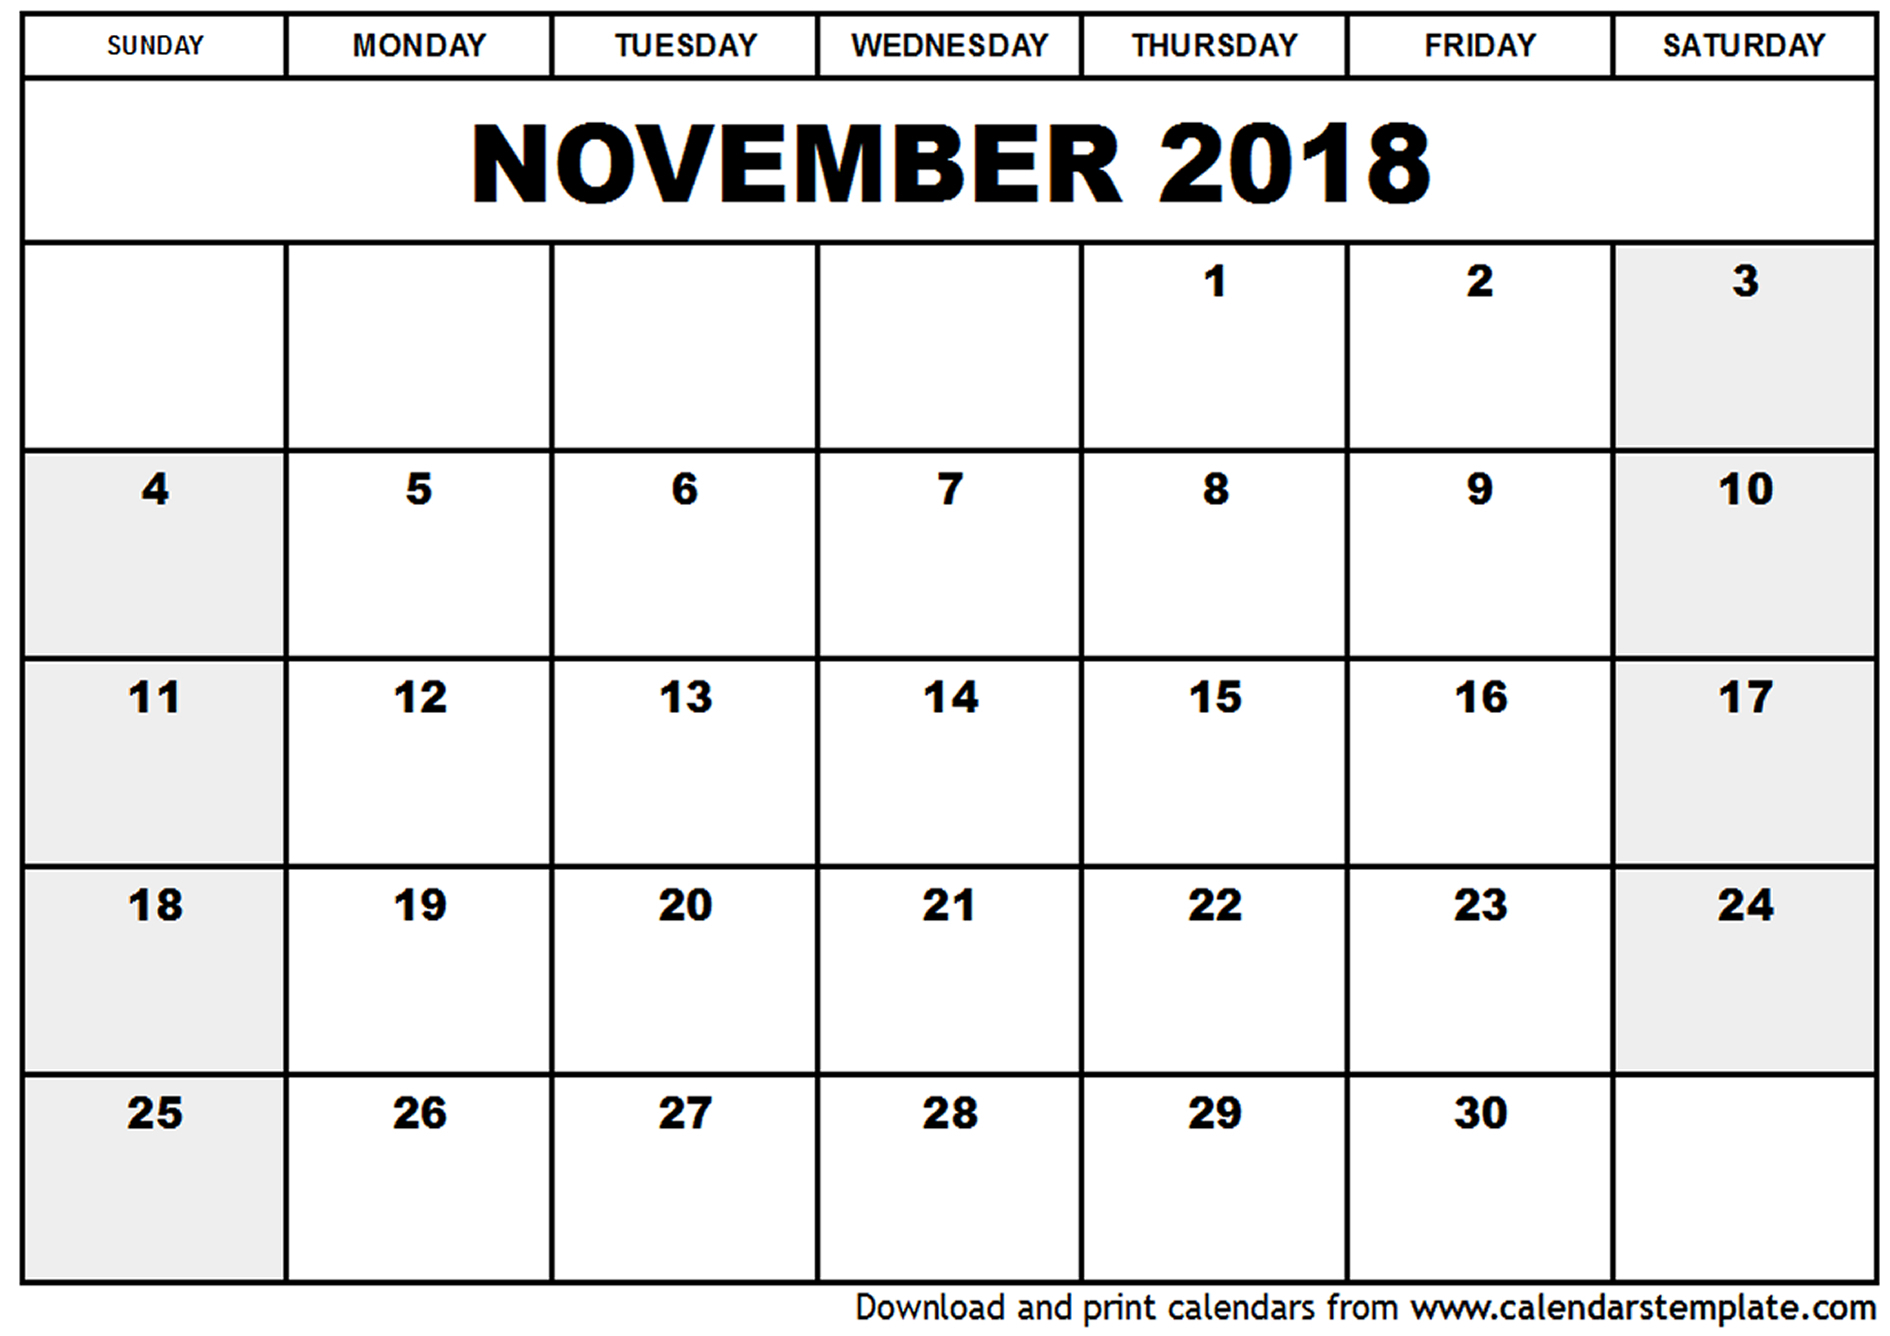 November 2018 Printable Calendar | Calendar For 2019